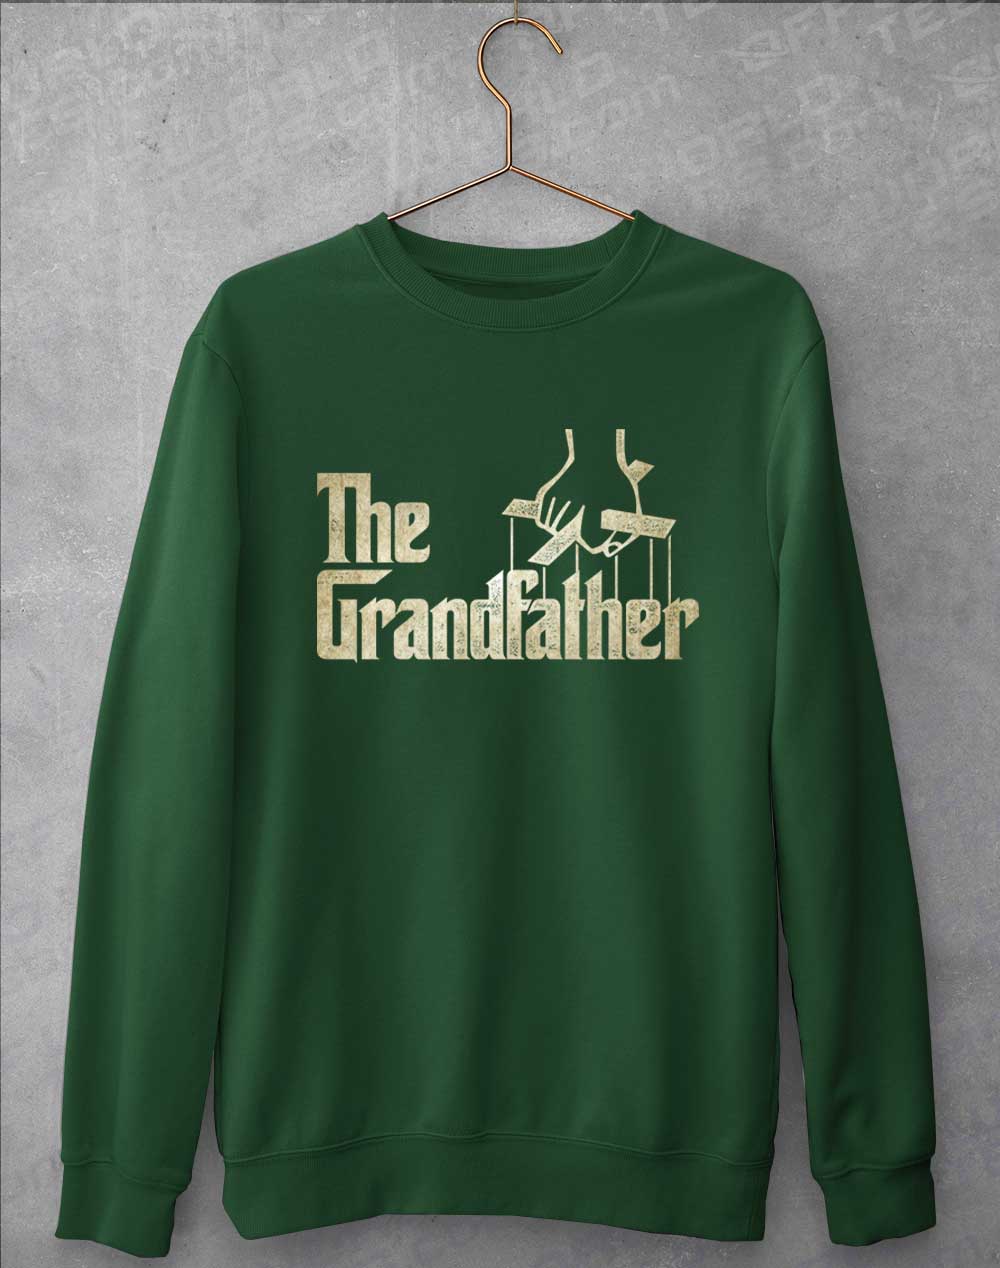 Bottle Green - The Grandfather Sweatshirt